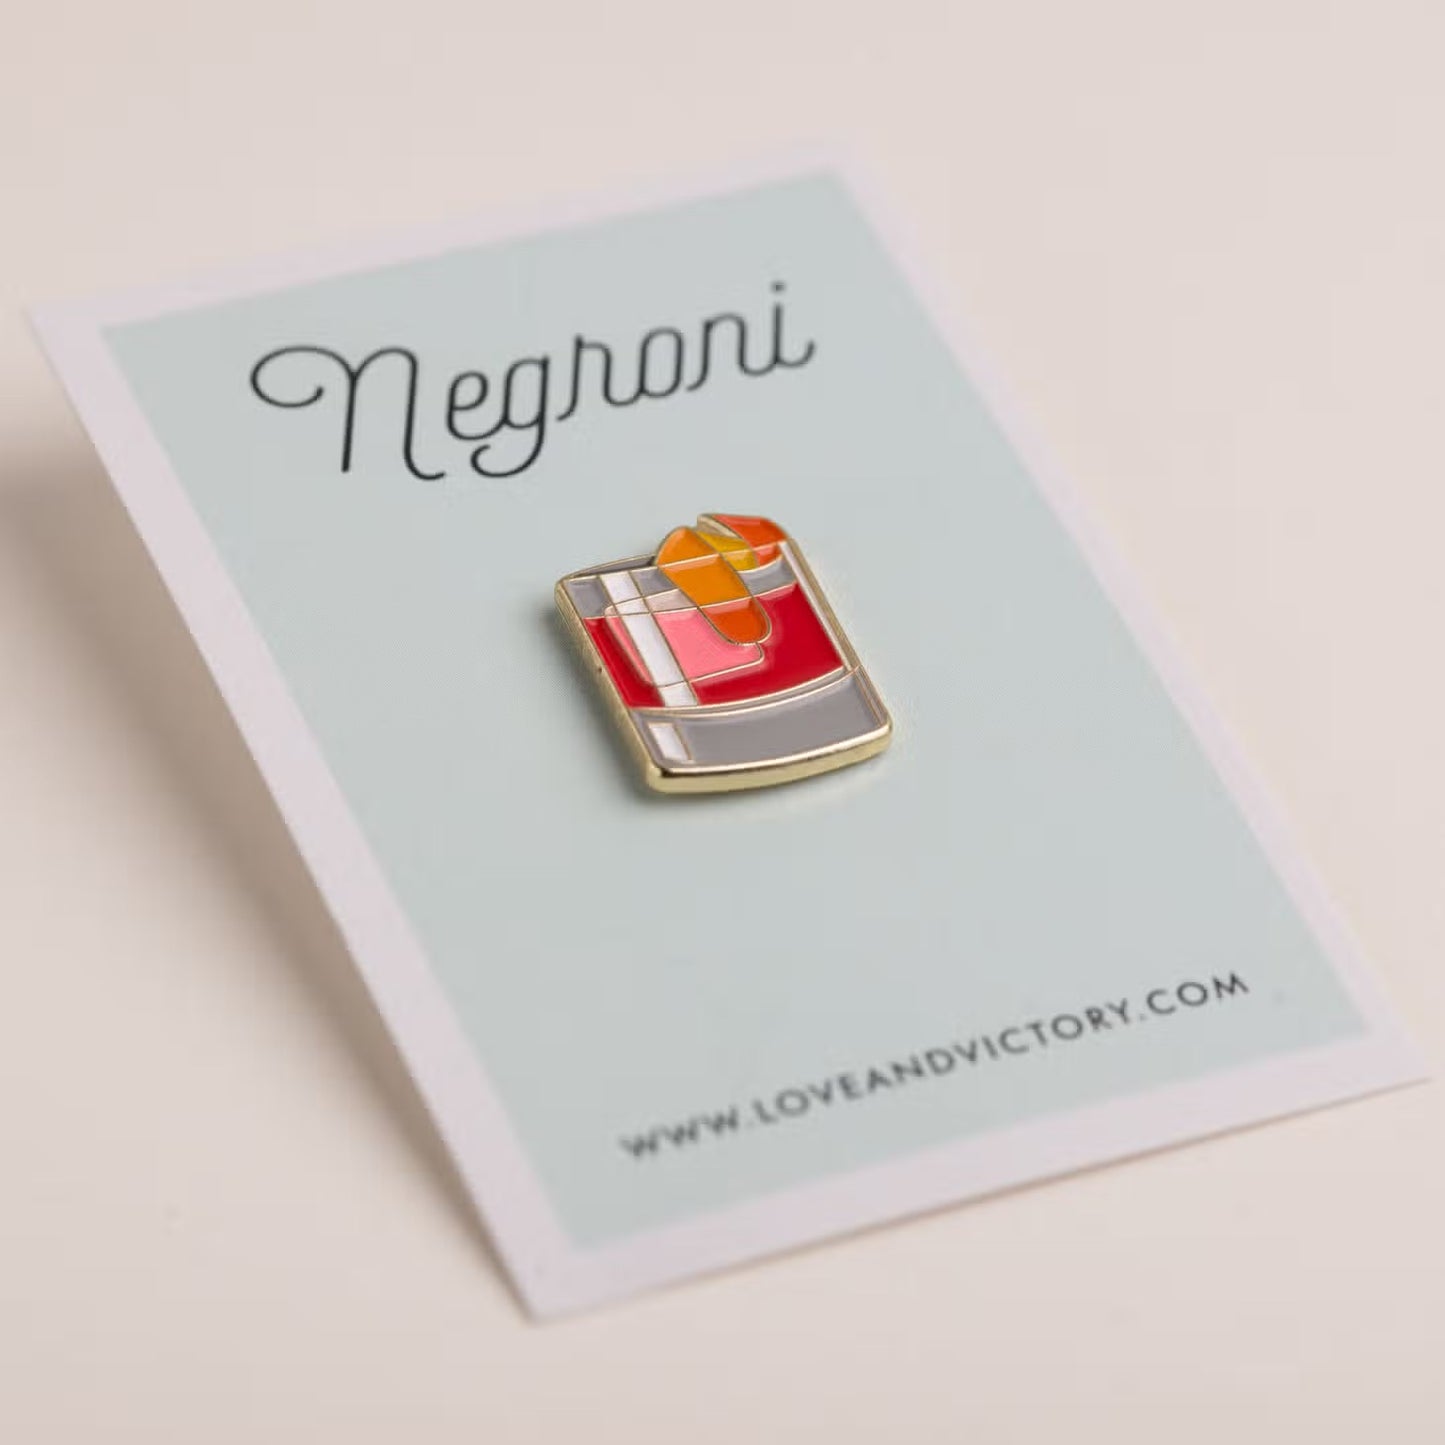 Negroni lapel pin on card backing